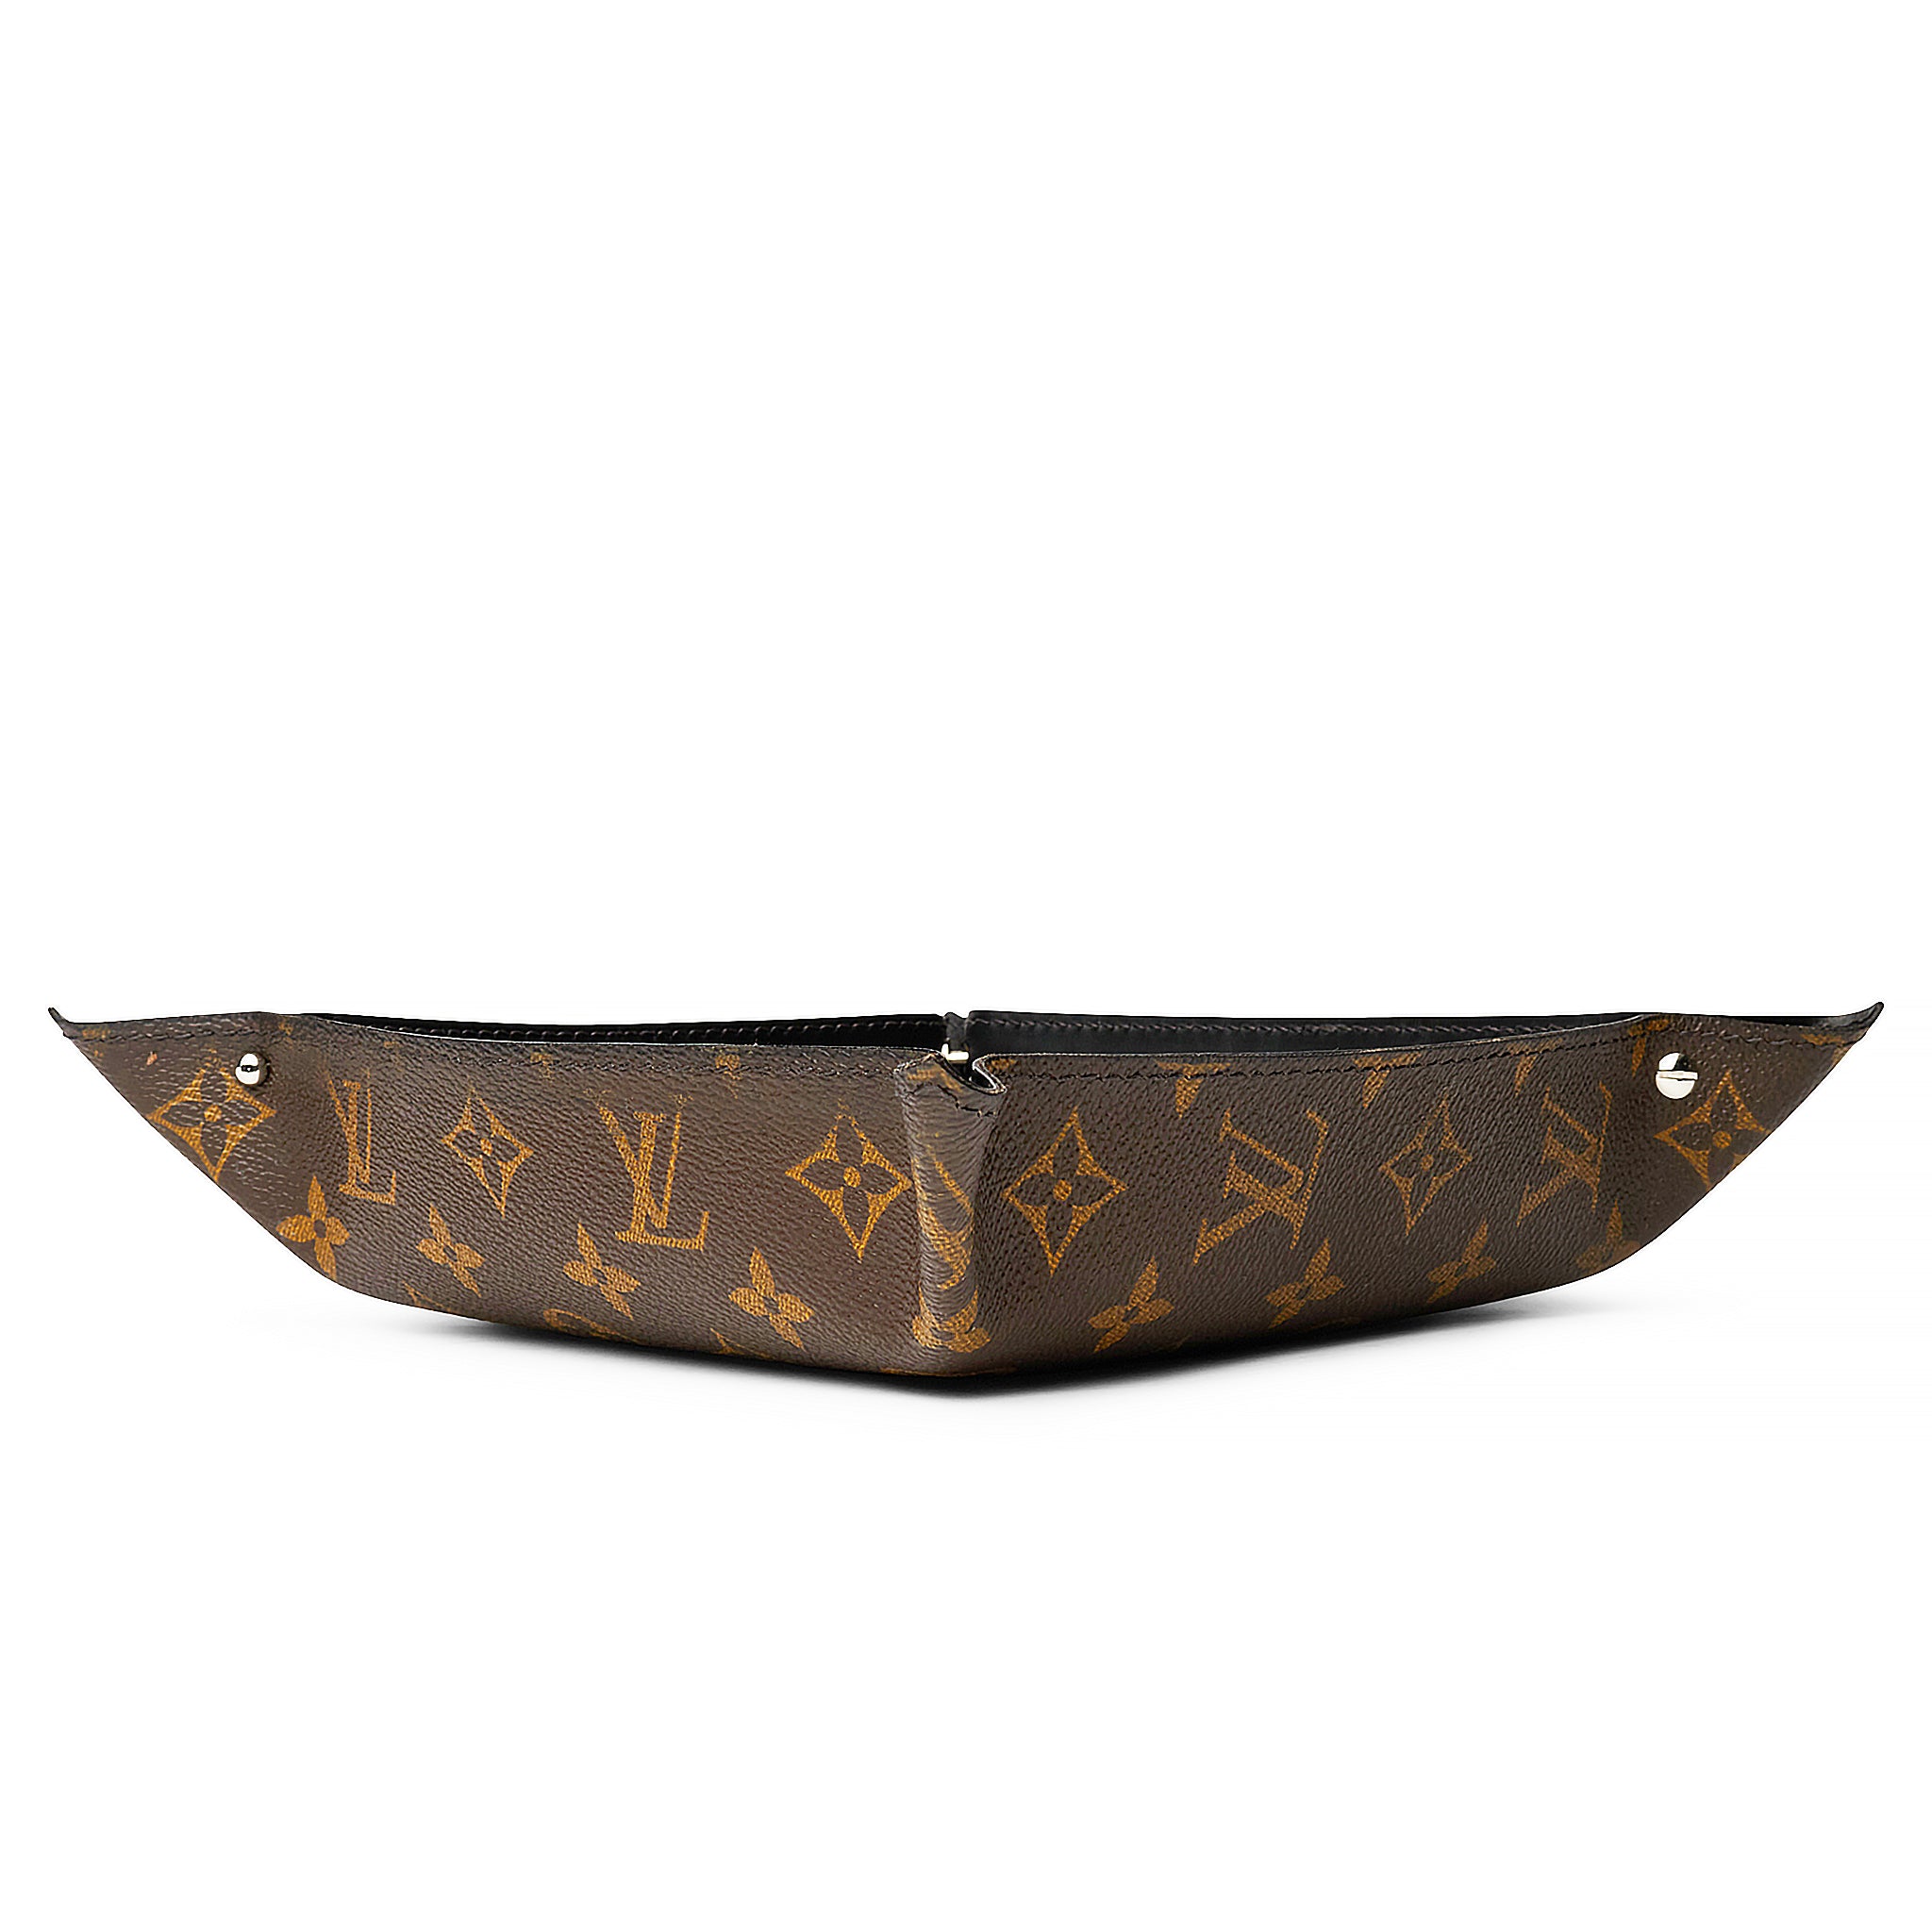 Louis Vuitton Tray Vido Posh Monogram Vip Canvas Leather Accessory SP2197